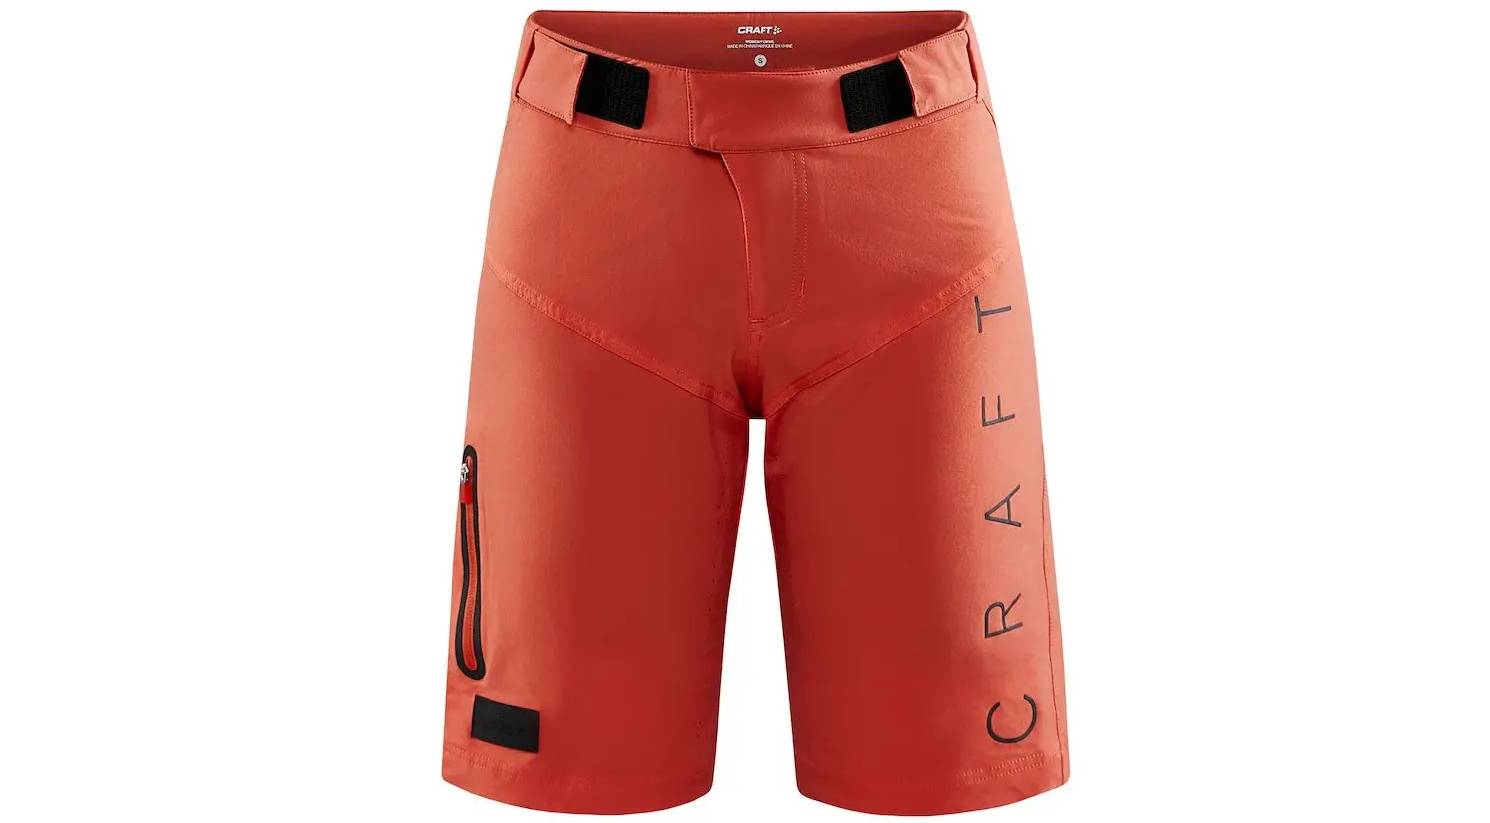 Фотография Велошорты Craft ADV Offroad XT Shorts with Pad женские, размер XL, сезон SS 21, оранжевый 